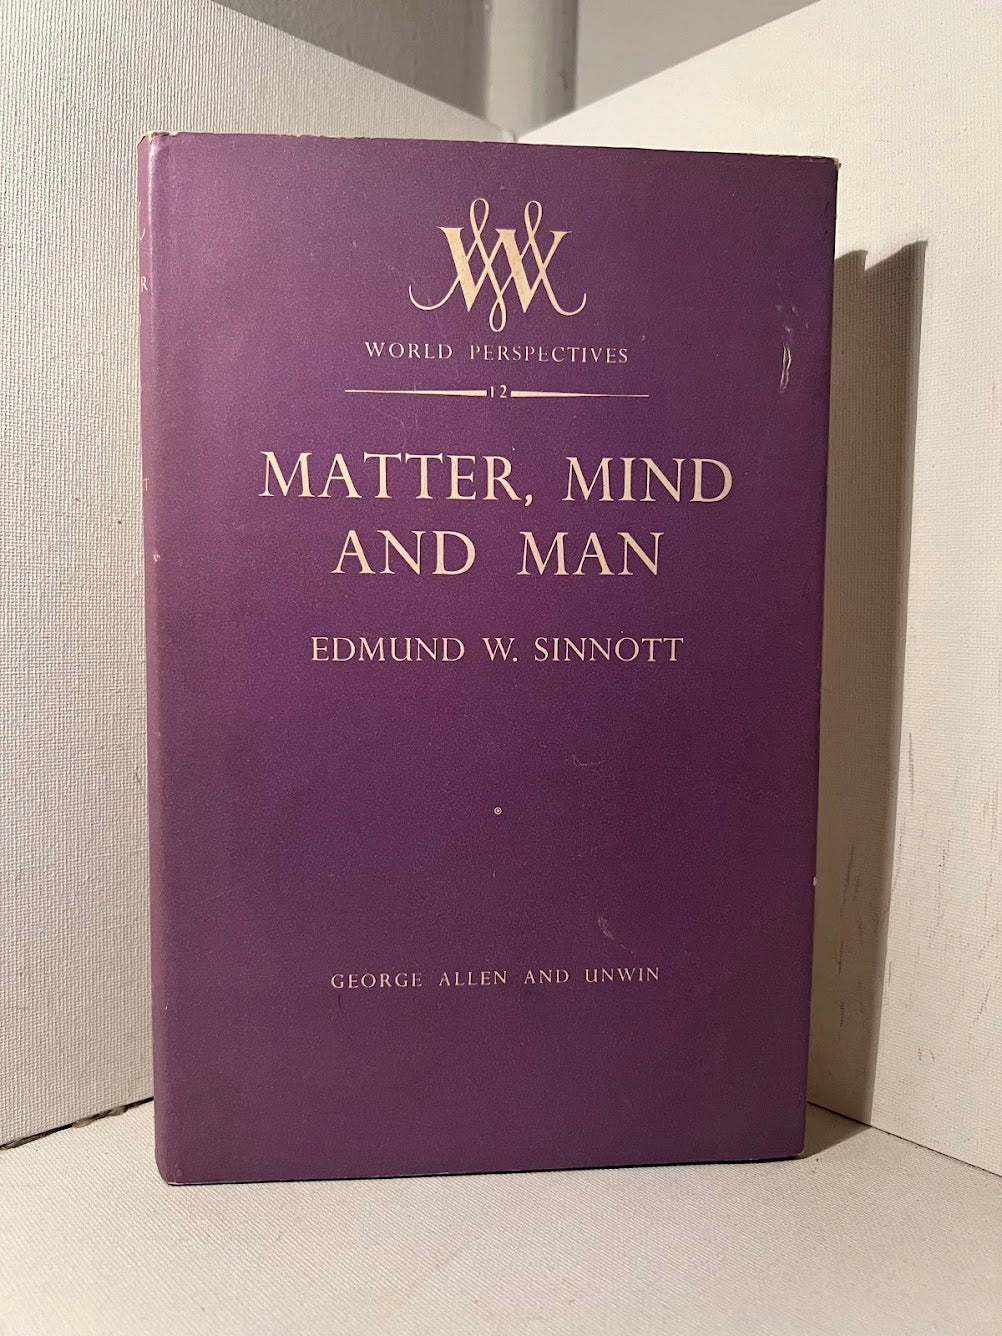 Matter, Mind and Man by Edmund W. Sinnott